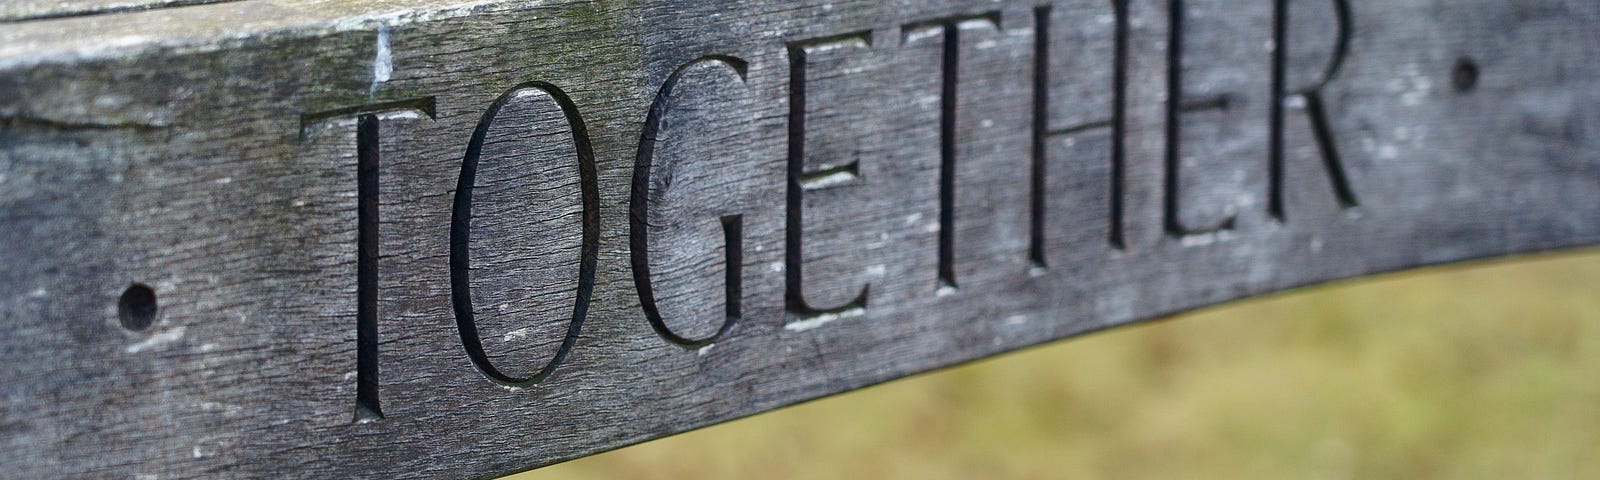 Sign saying “Together”